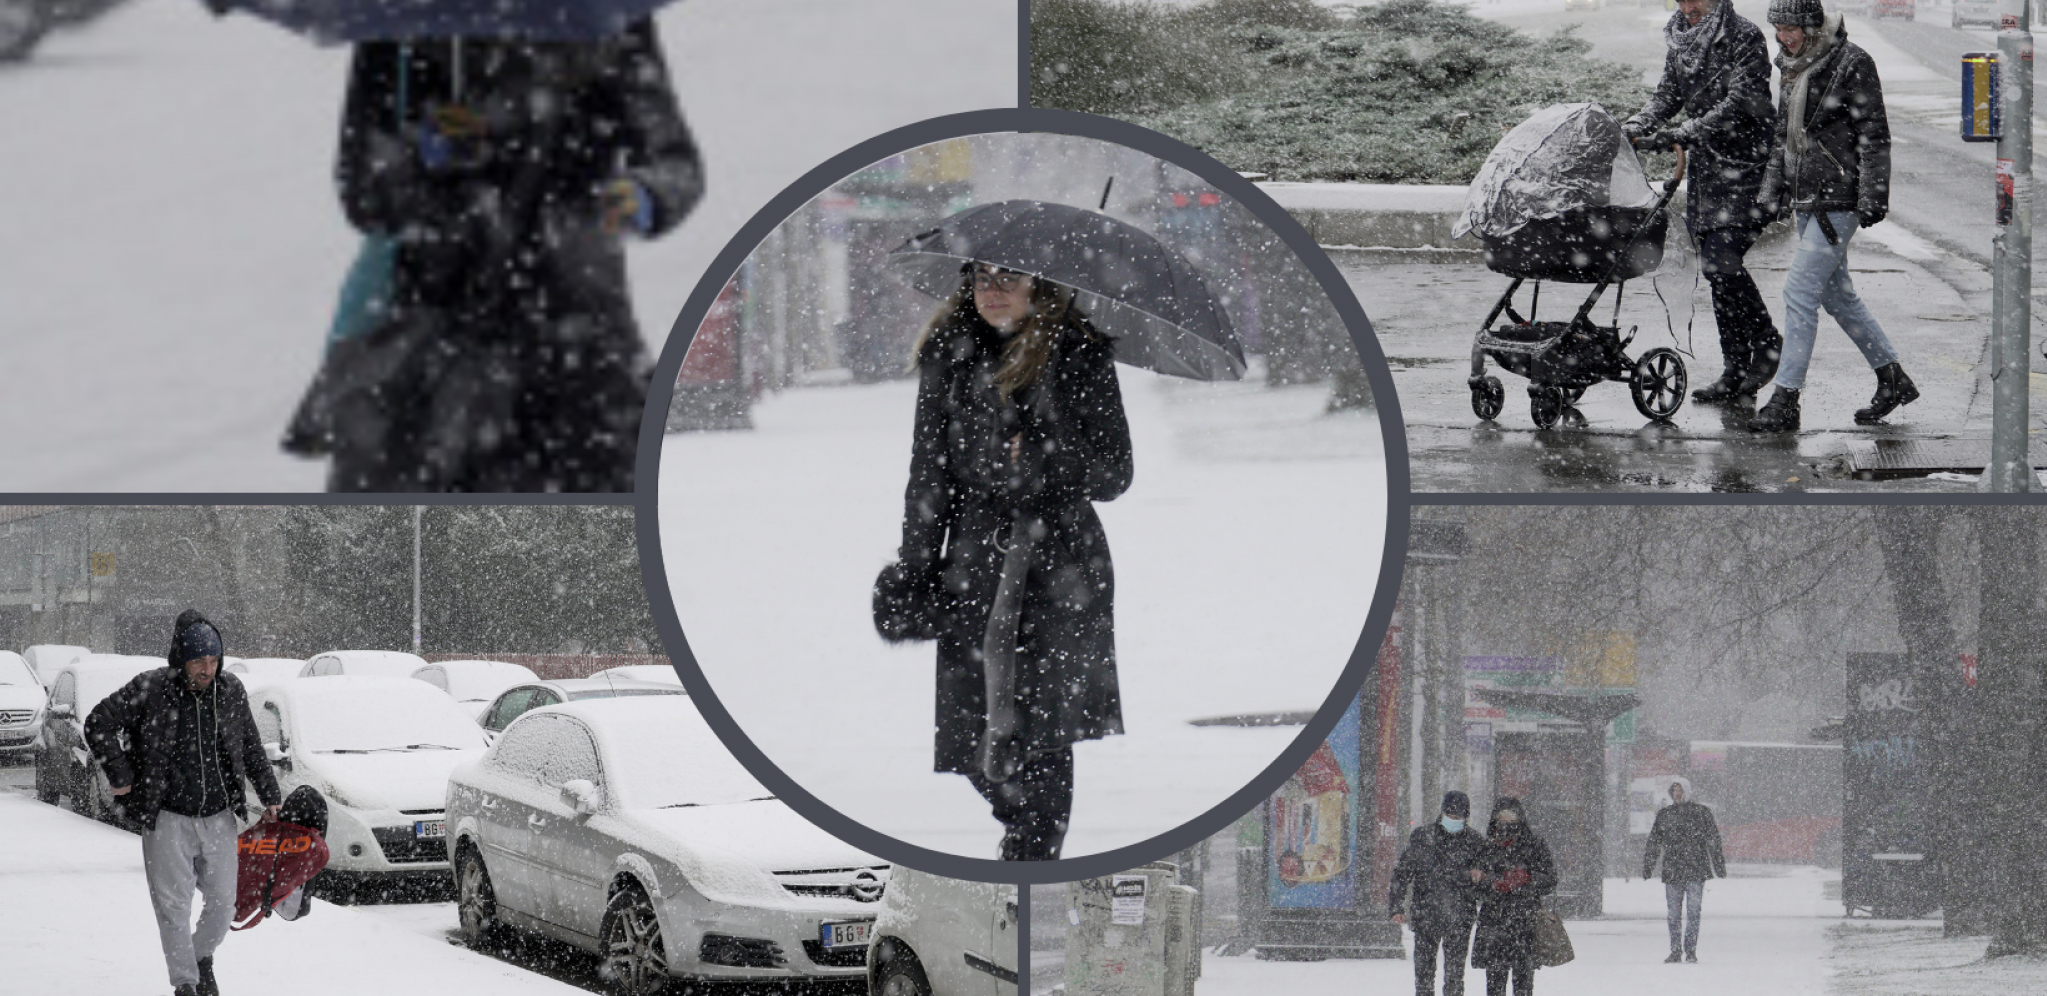 SNEG DOLAZI U DECEMBRU Detaljna vremenska prognoza za Srbiju donosi nestabilno vreme i temperature ispod nule